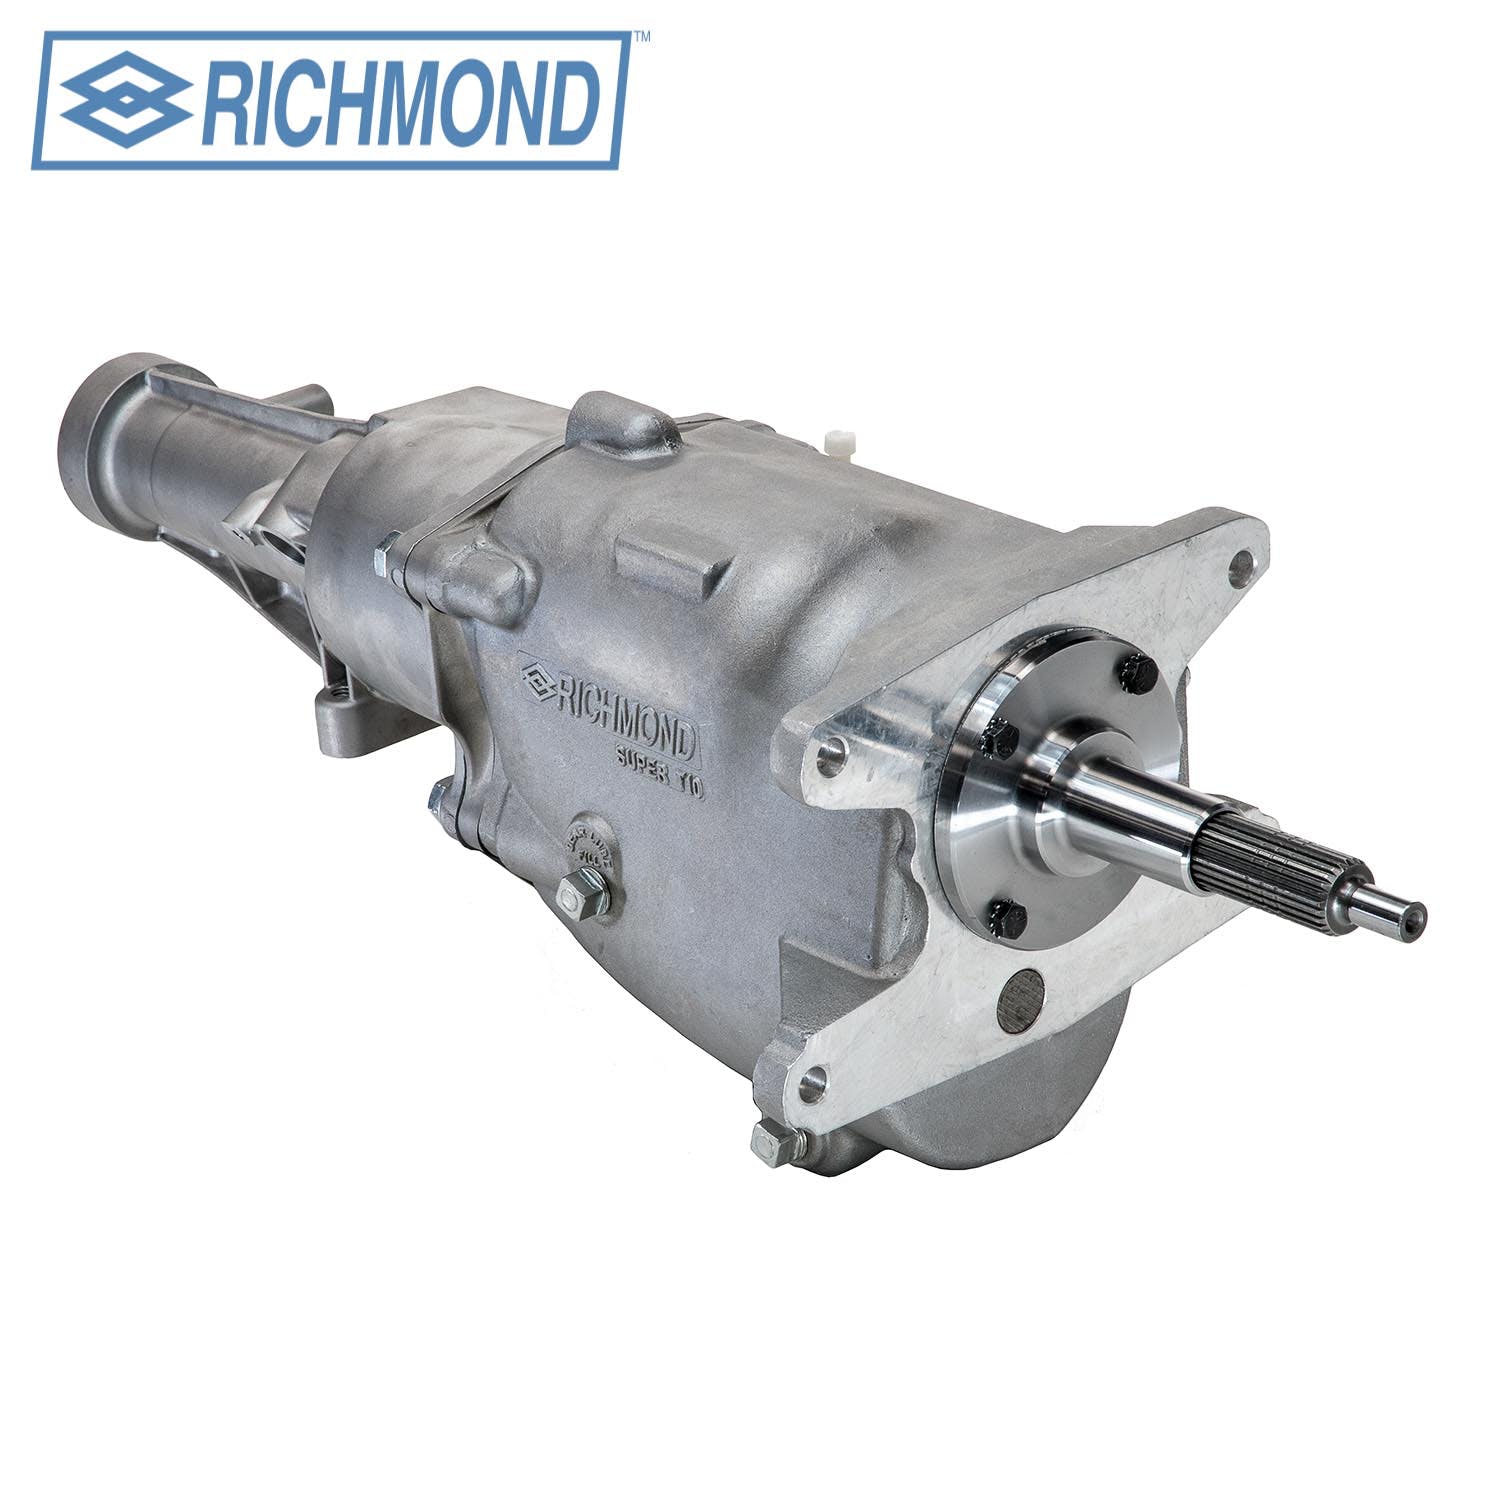 Richmond 1304000062 Super T-10 4-Speed Transmission